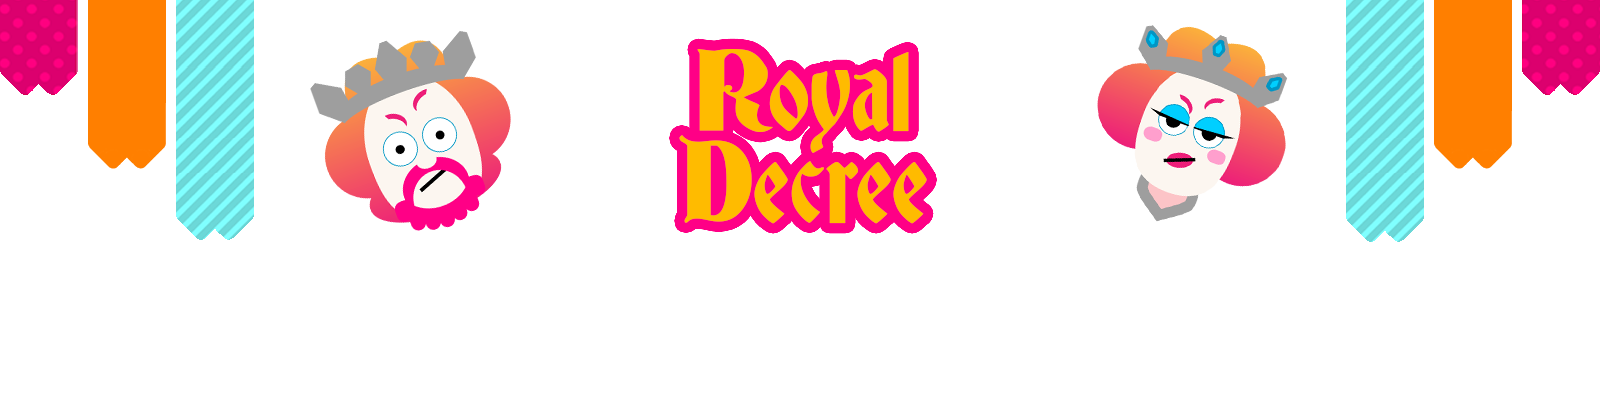 Royal Decree